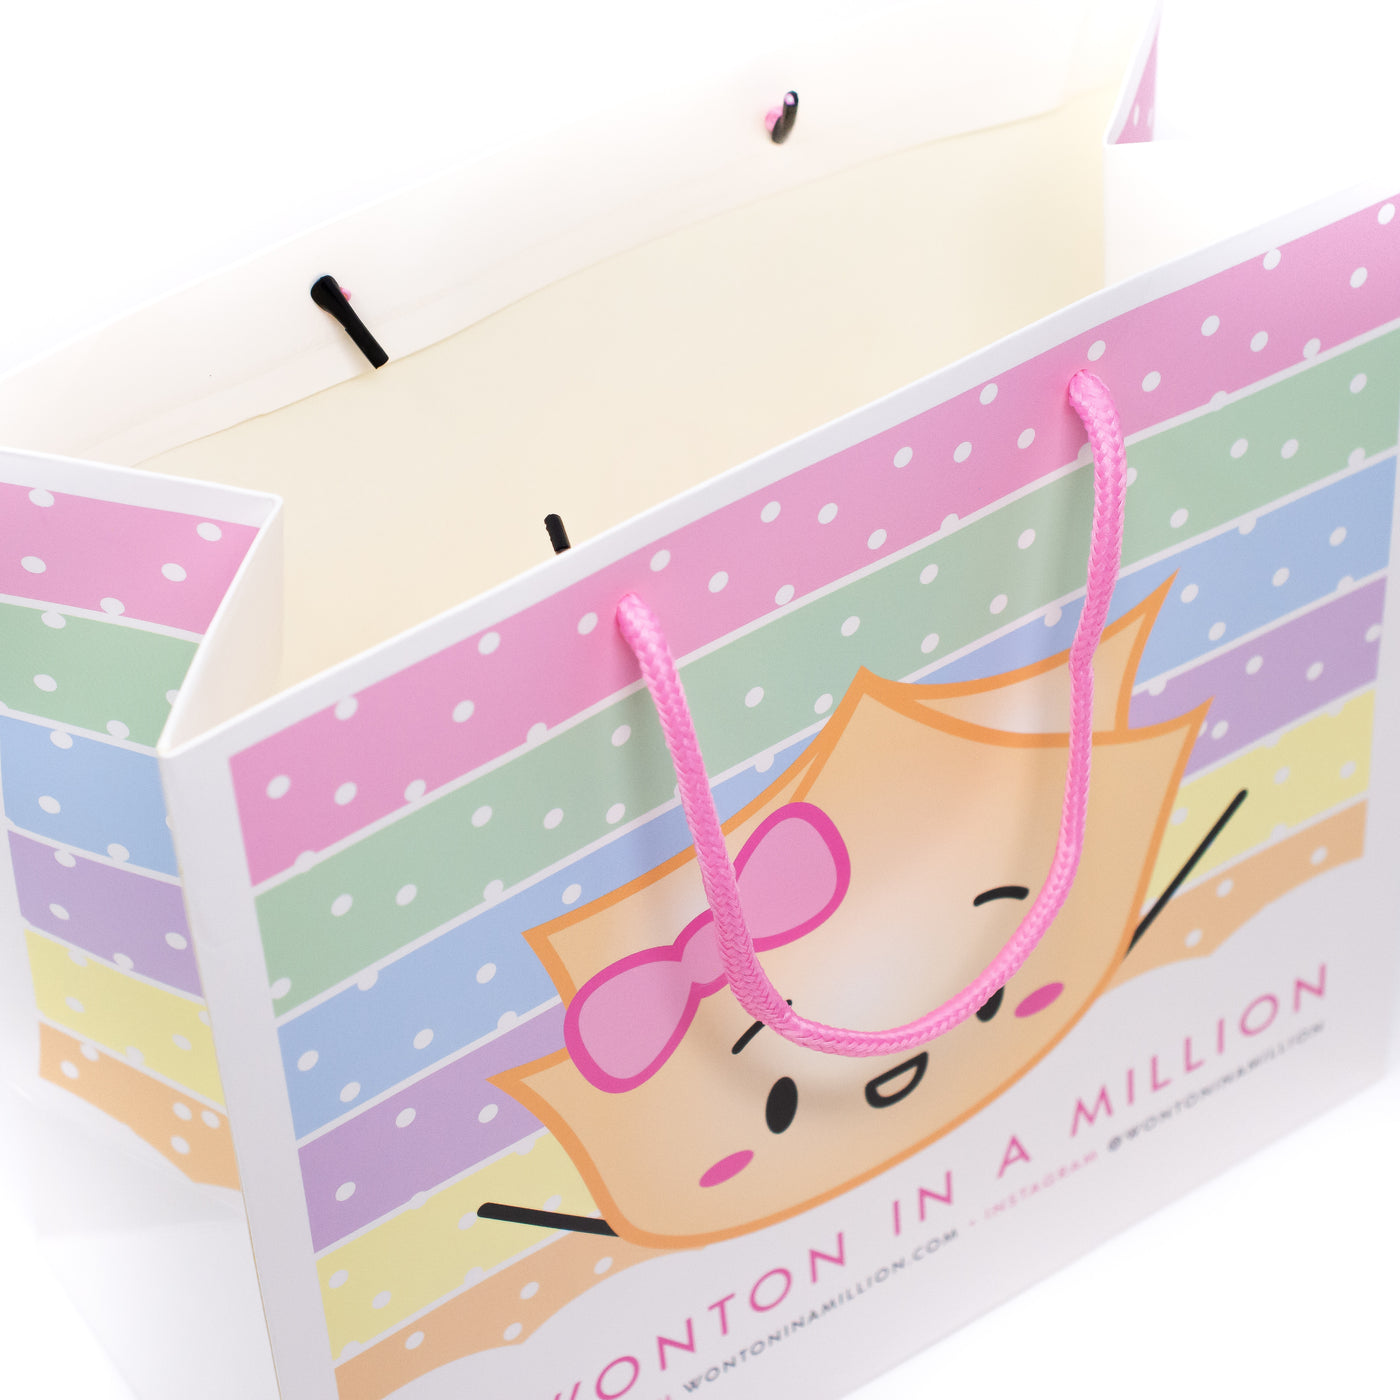 MISC011 | Wonton In A Million Gift Bag